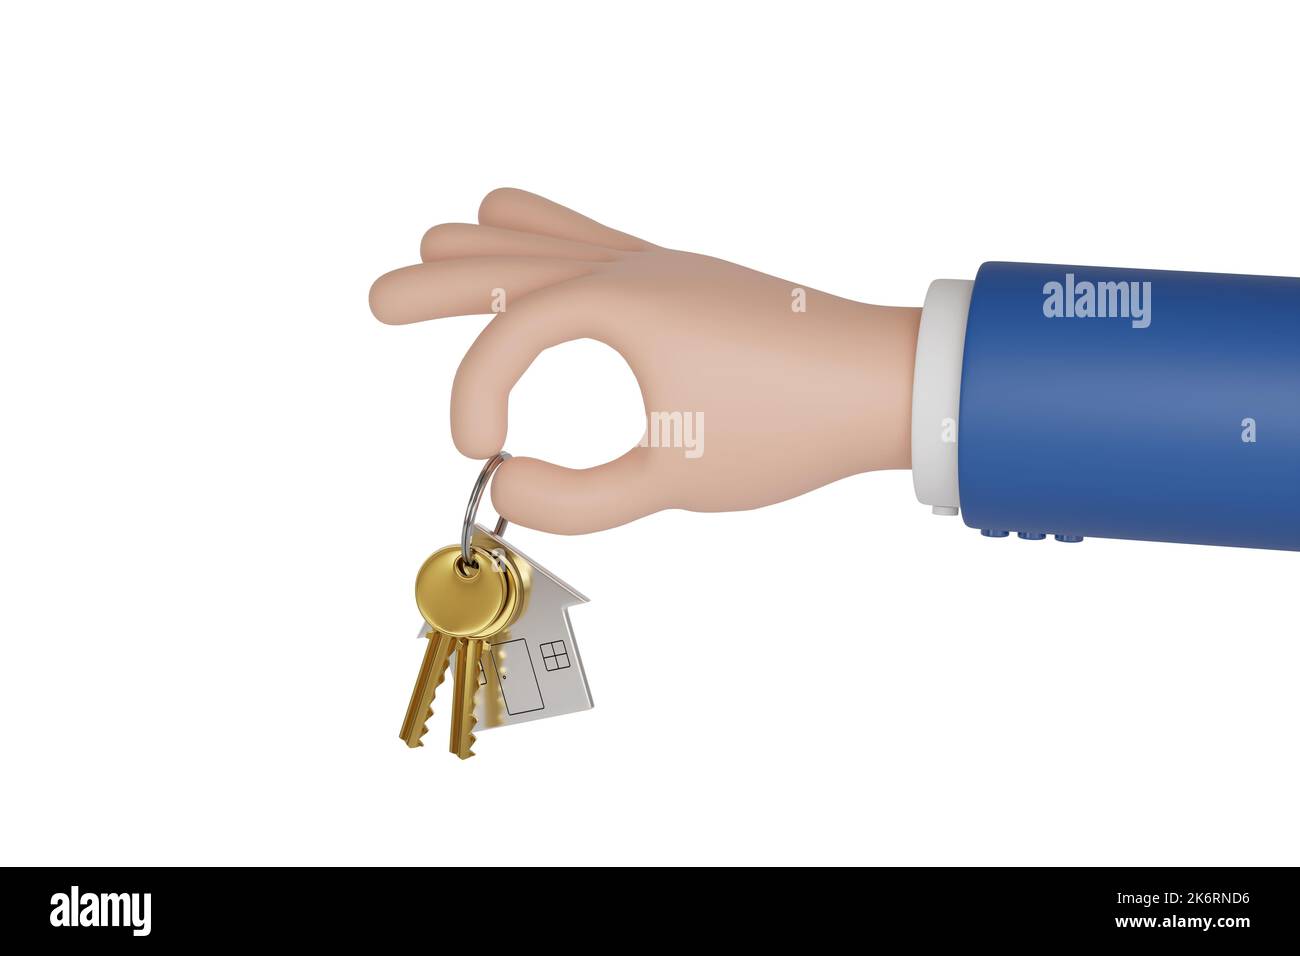 Cartoon hand holding a house shaped key ring. 3d illustration. Stock Photo